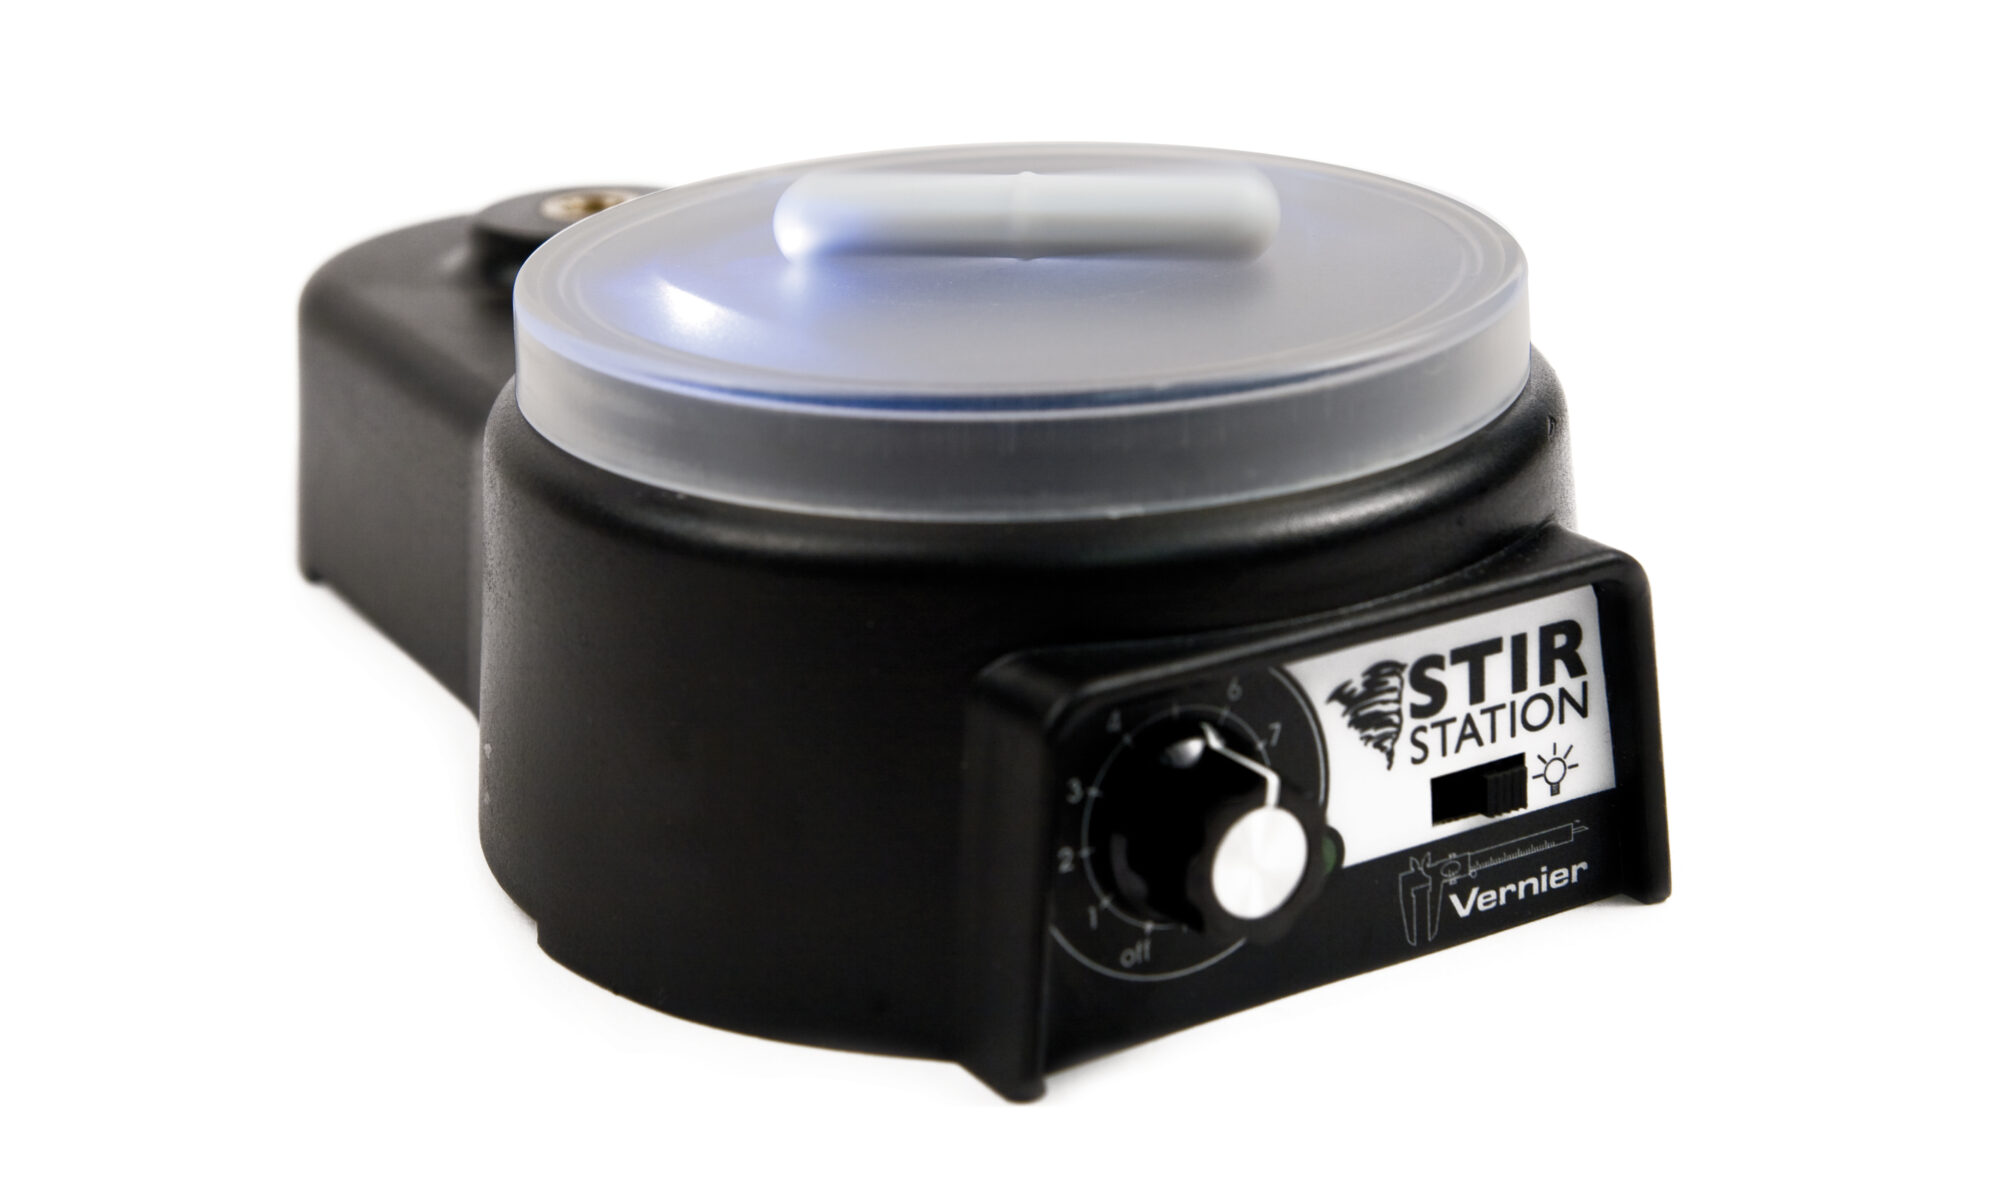 Stir Station product image